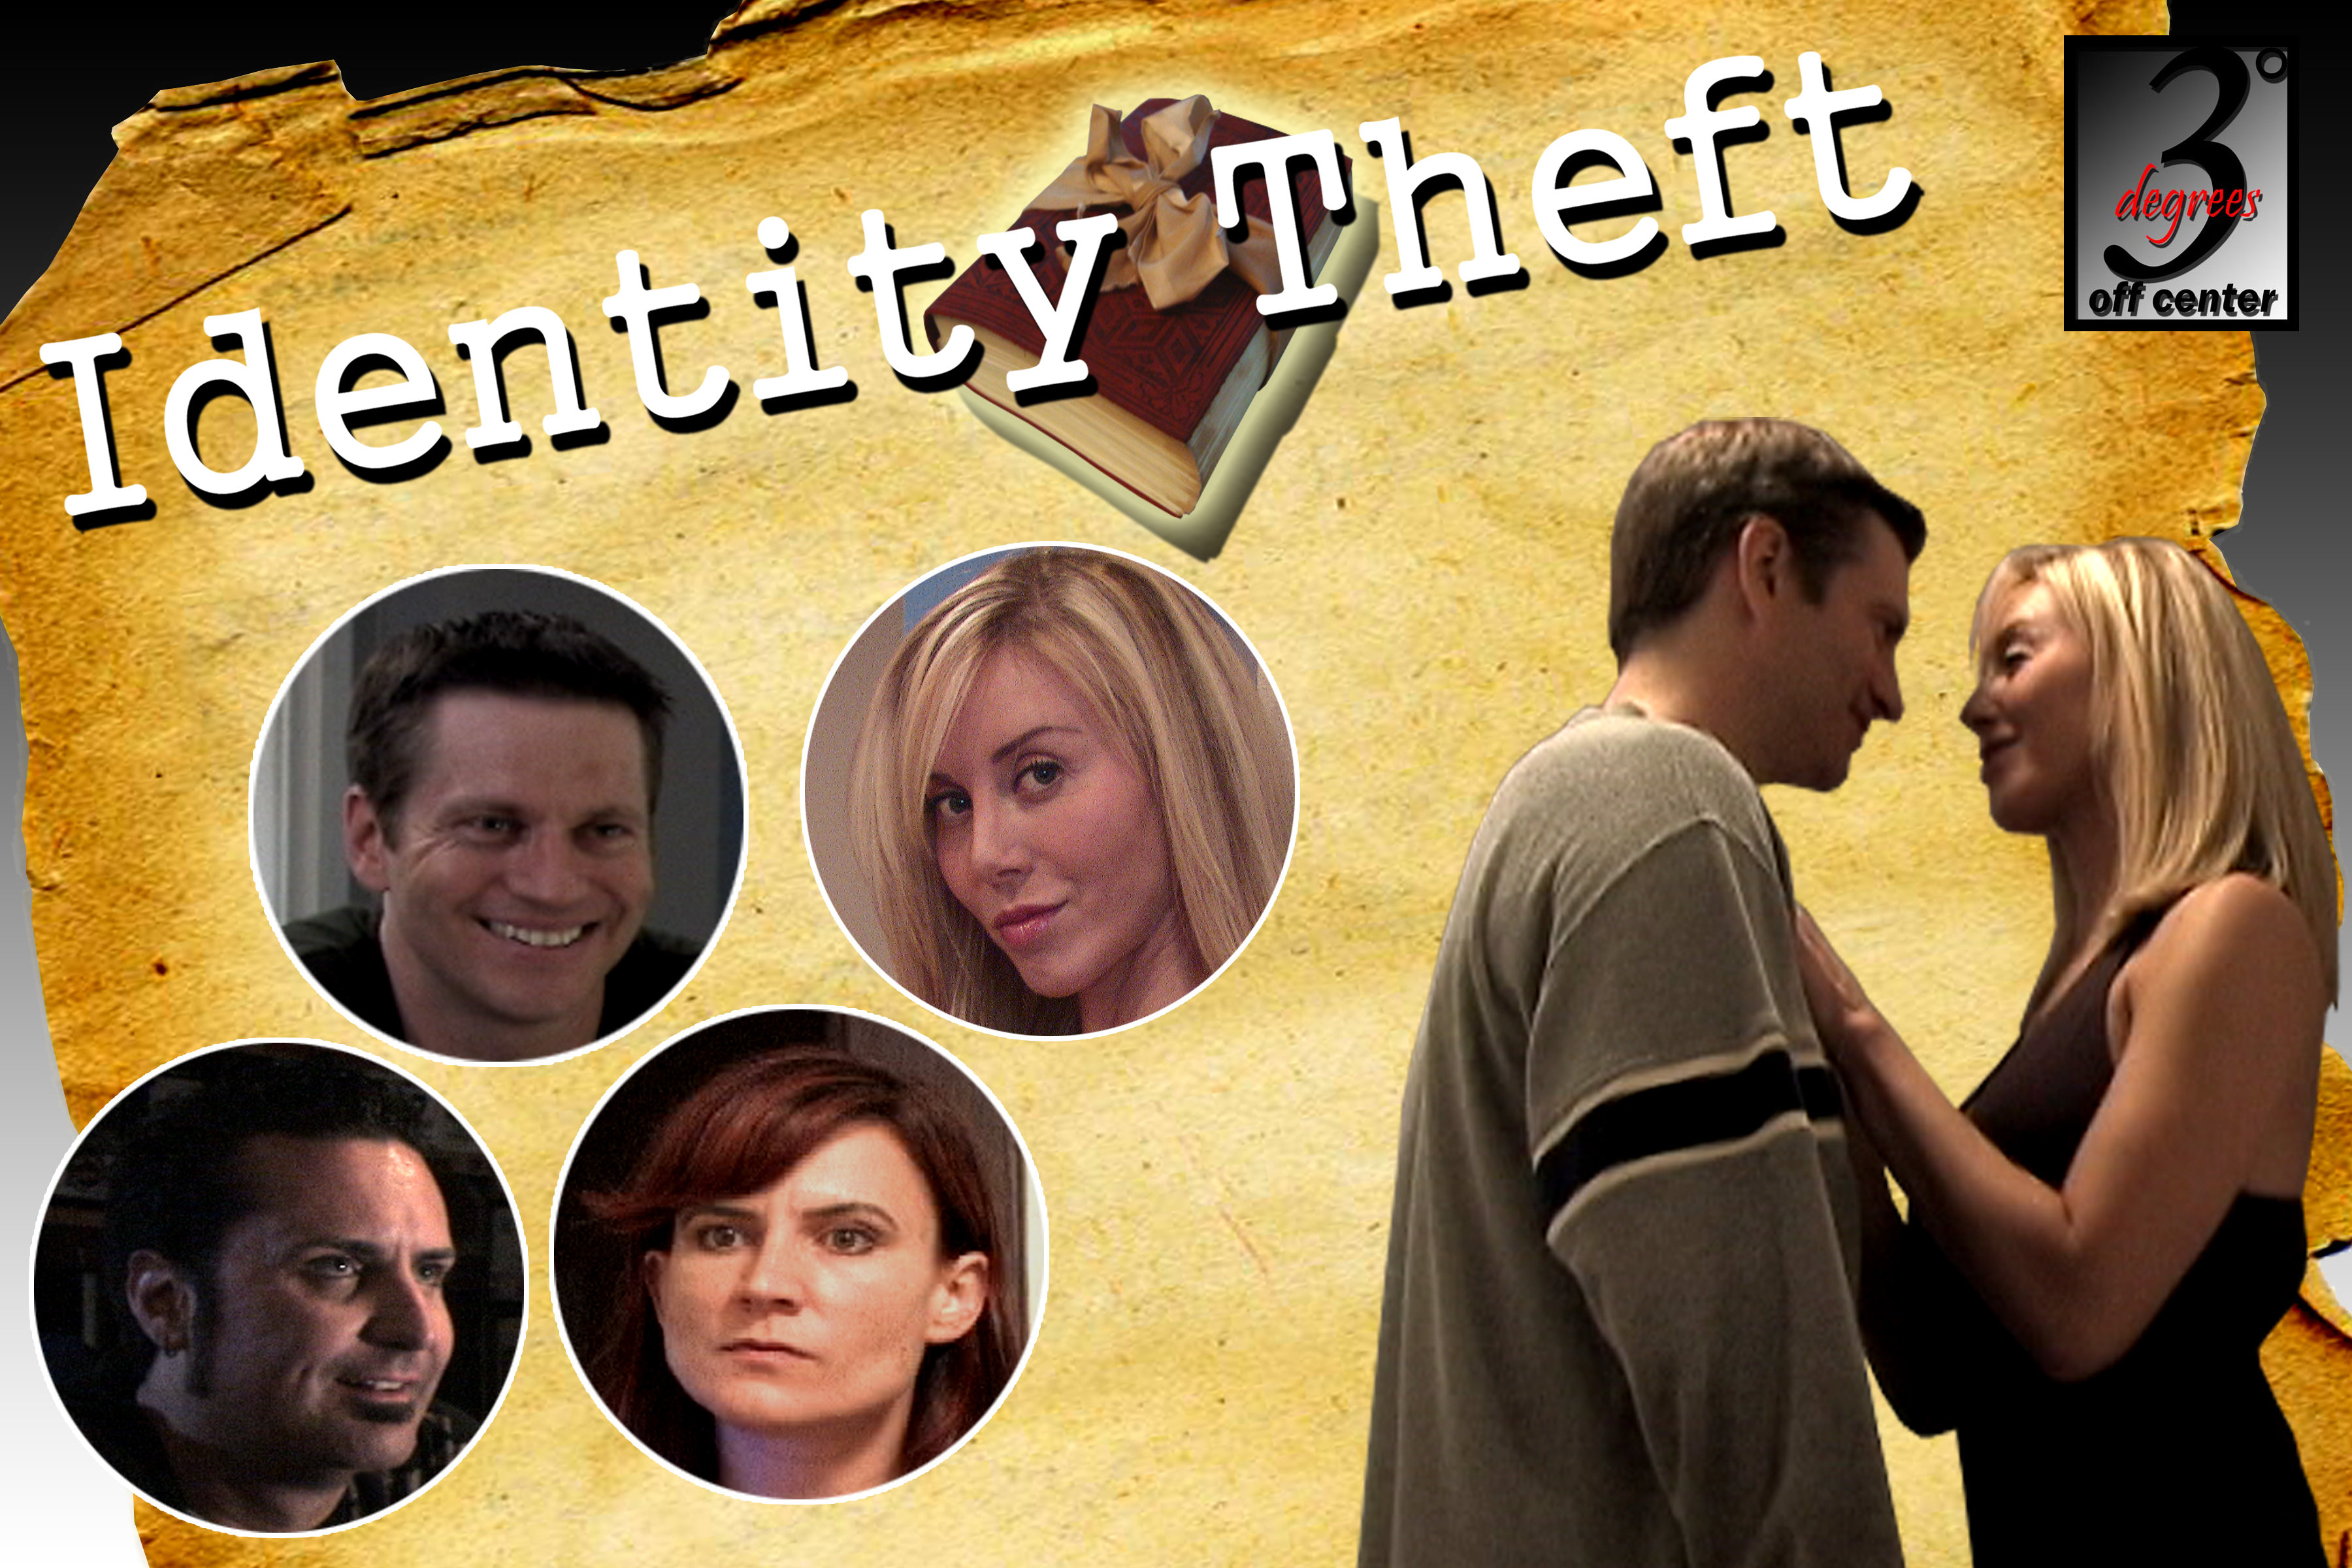 Laura Weintraub, Rachel Hardy, James A. Ward and Michael Cole in Identity Theft (2009)